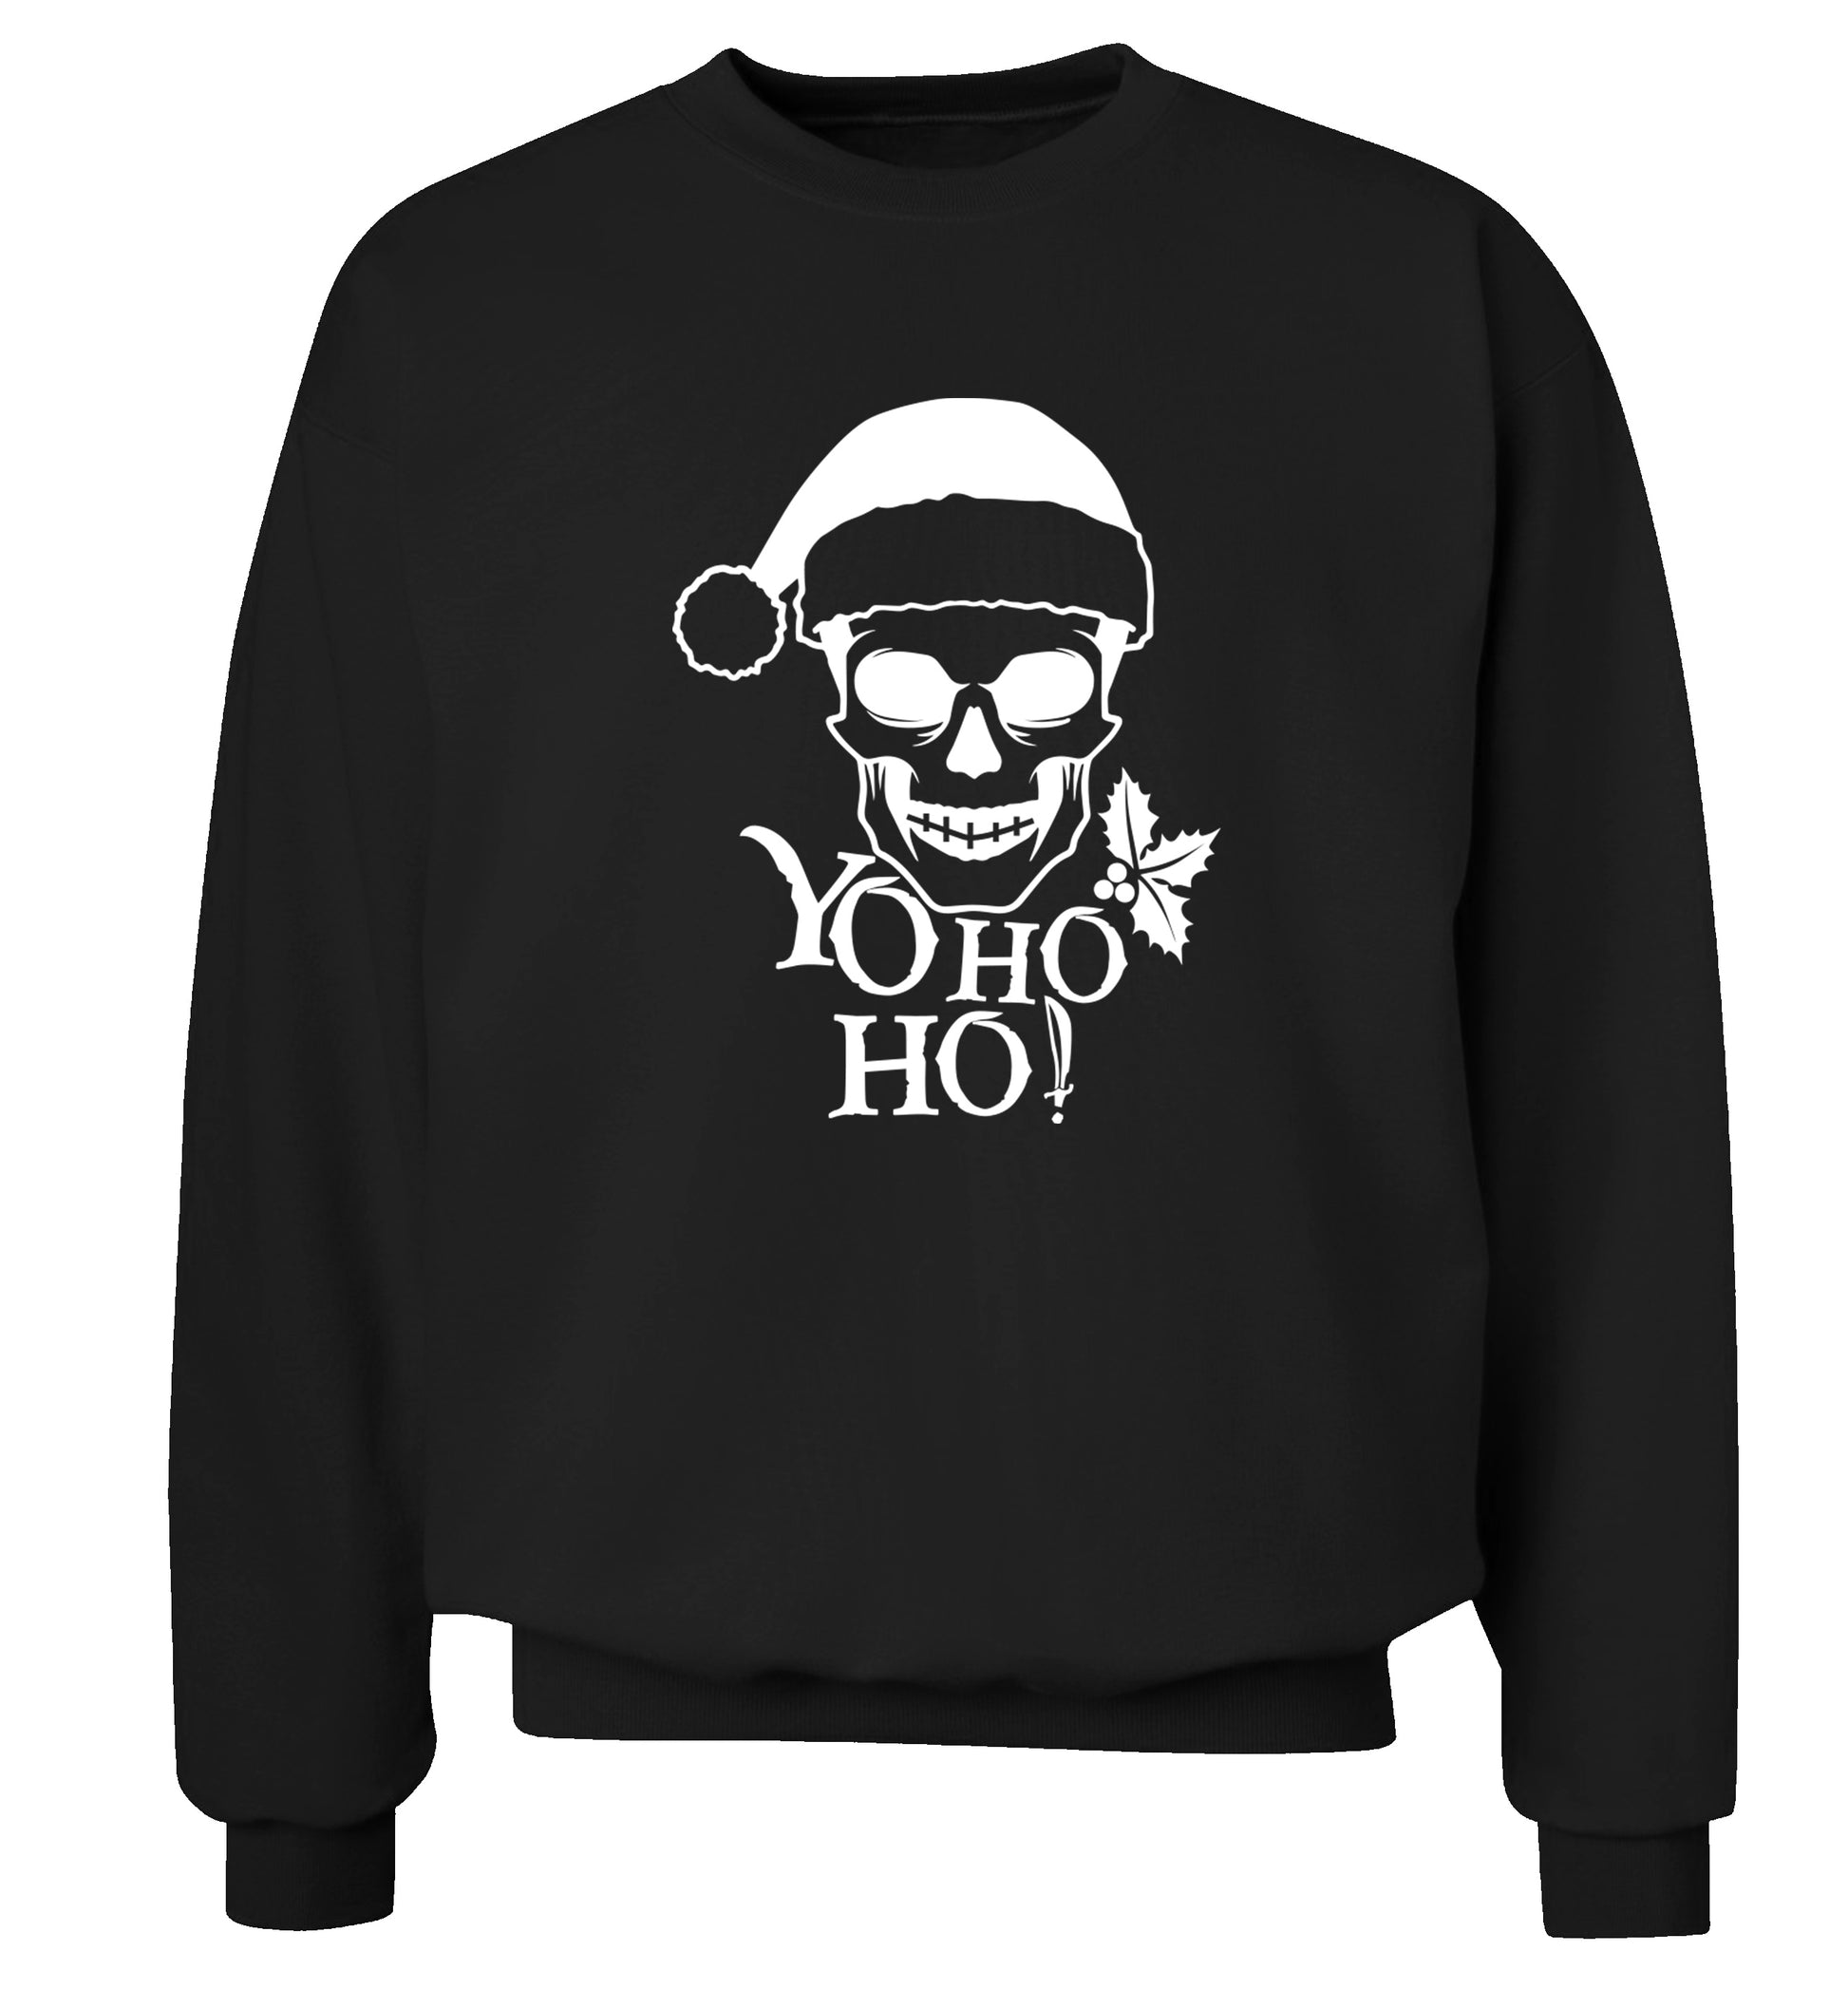 Yo ho ho! Adult's unisex black Sweater 2XL